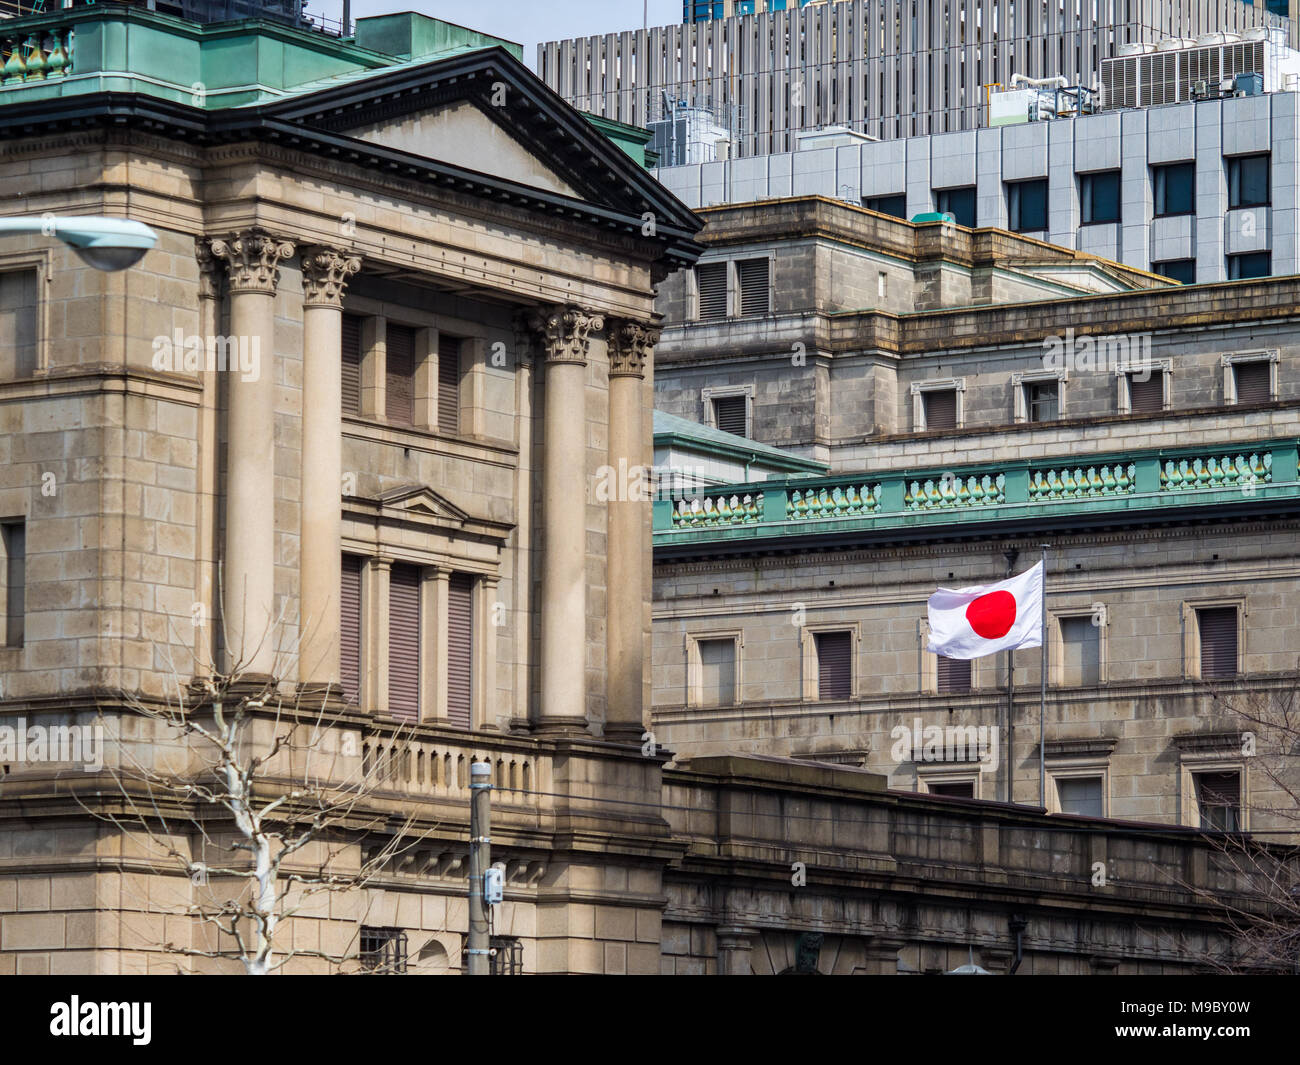 Bank of Japan, BoJ, the Japanese Central Bank also called Nichigin, in Tokyo Japan. established 1882. Stock Photo